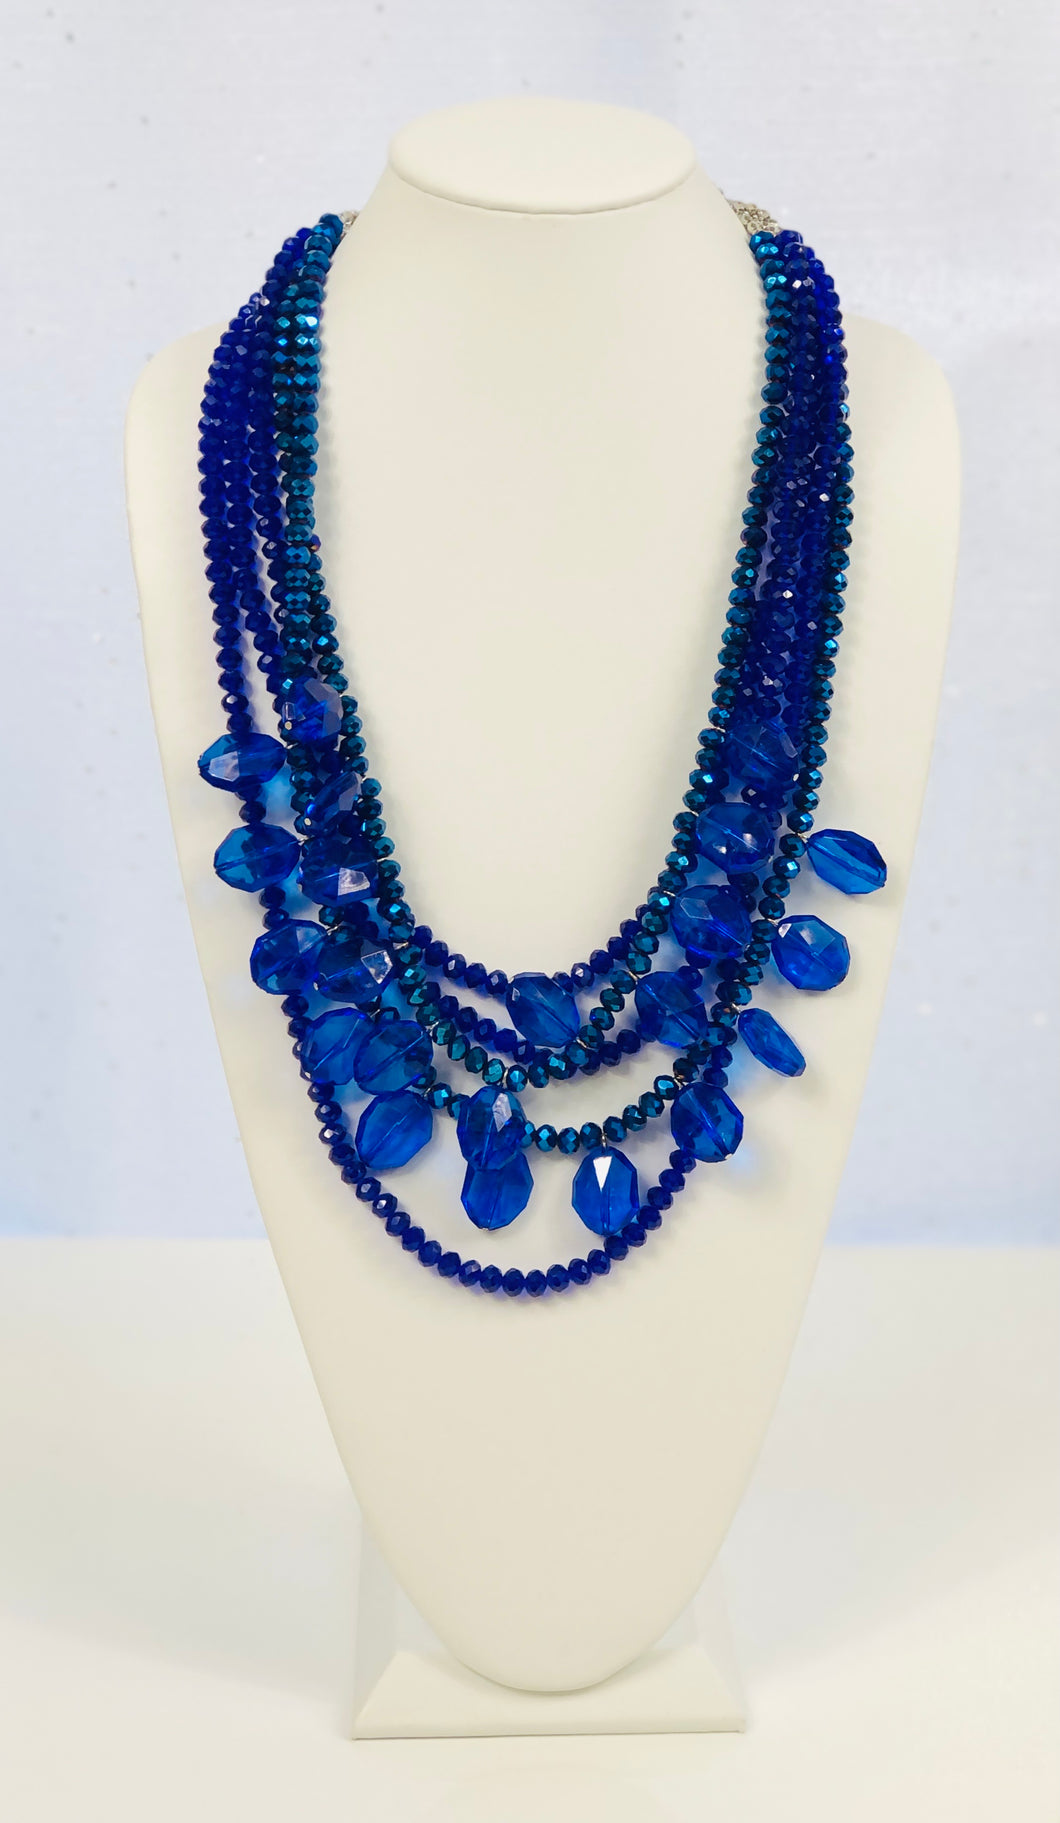 Kensington Glass Beads Necklace - Sapphire